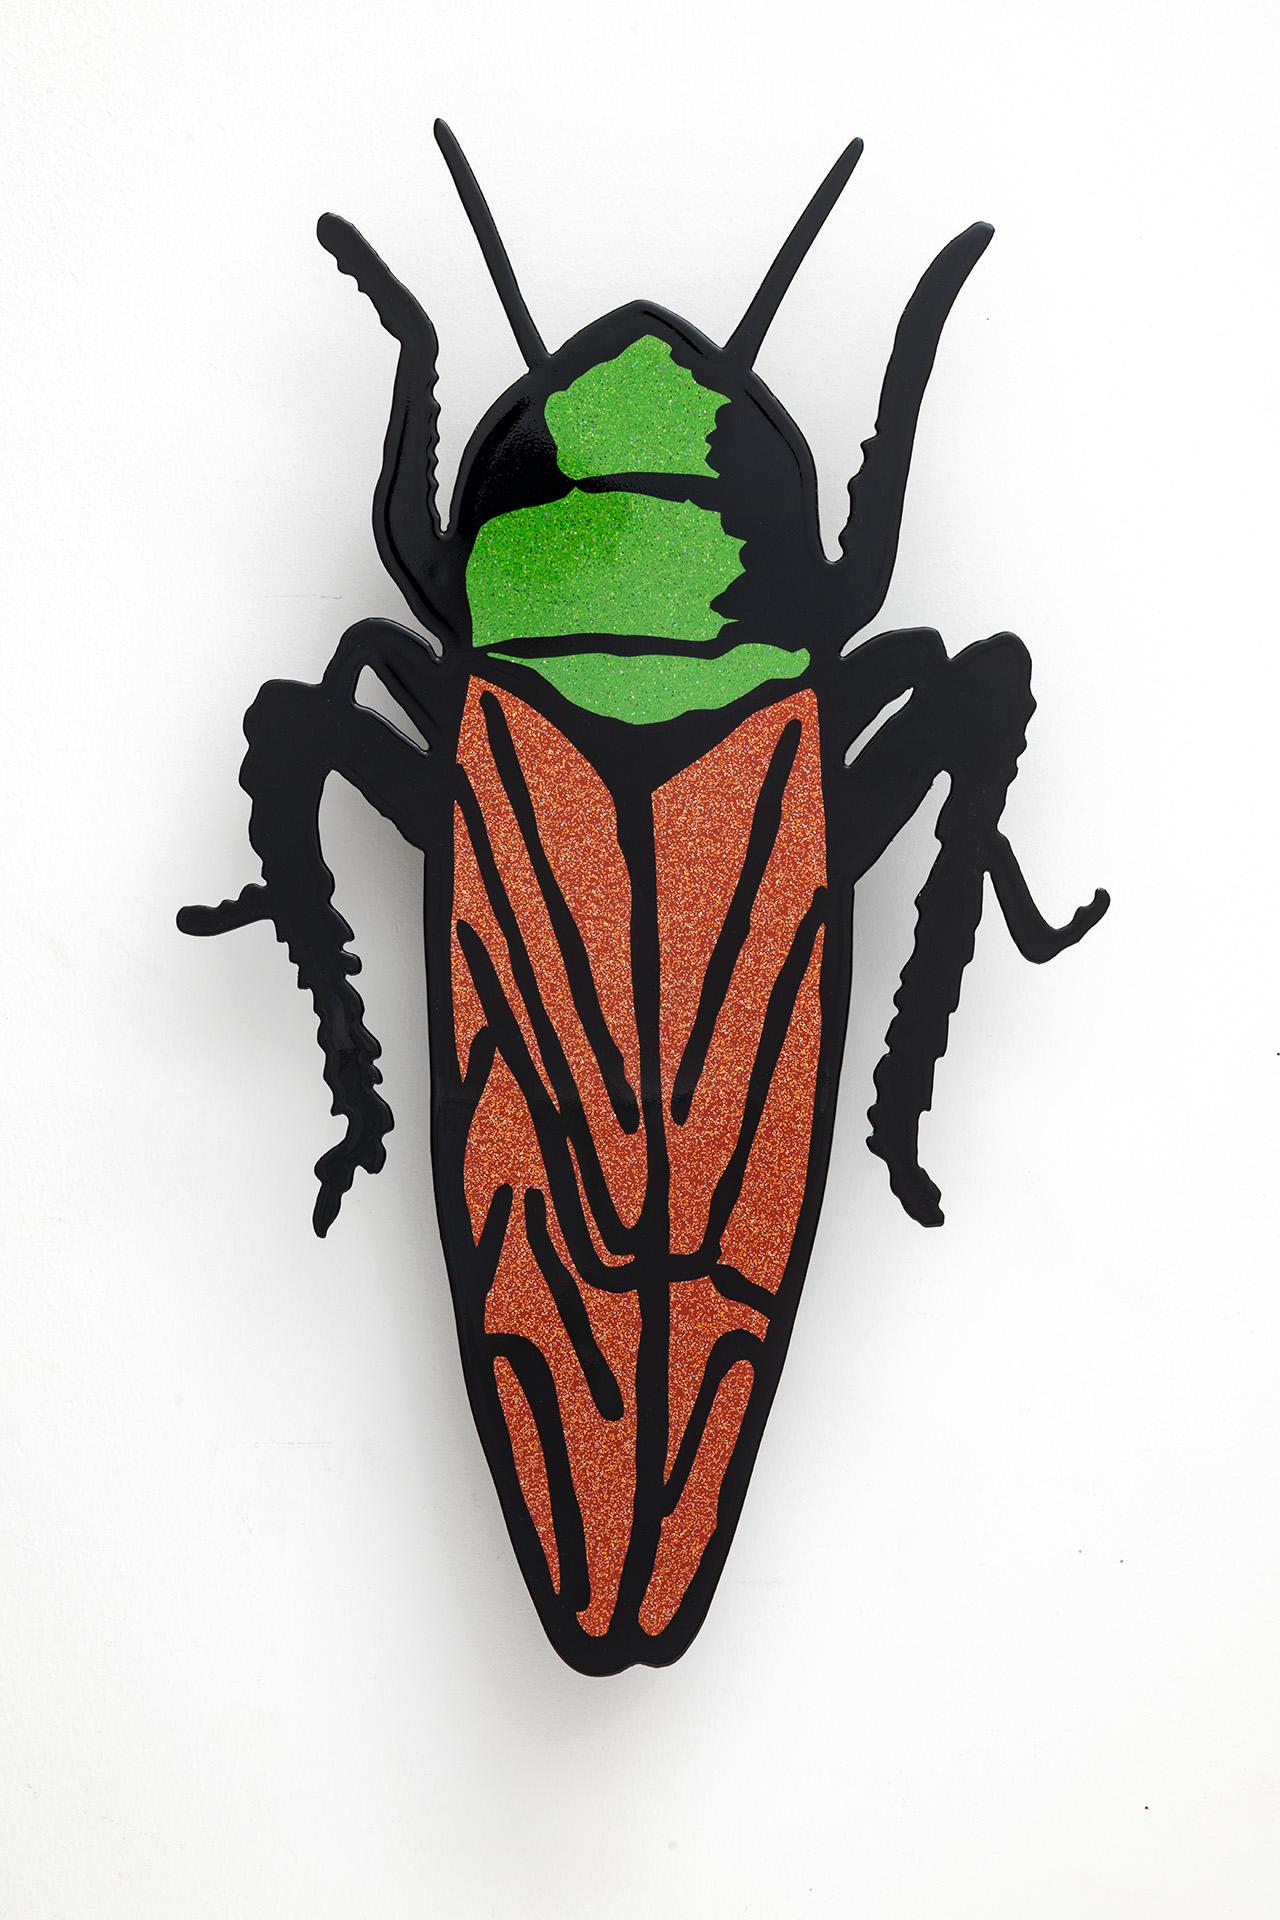 Cockroach - Mixed Media Art by Tom Binger